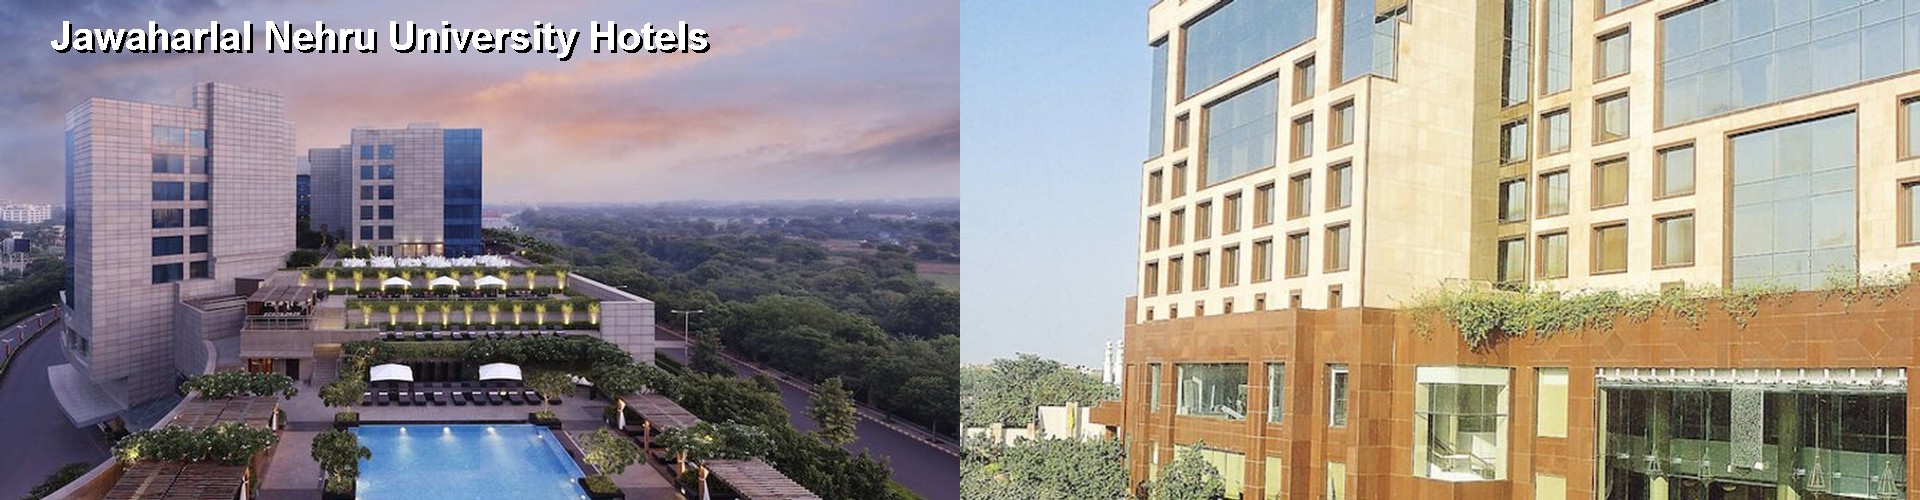 5 Best Hotels near Jawaharlal Nehru University